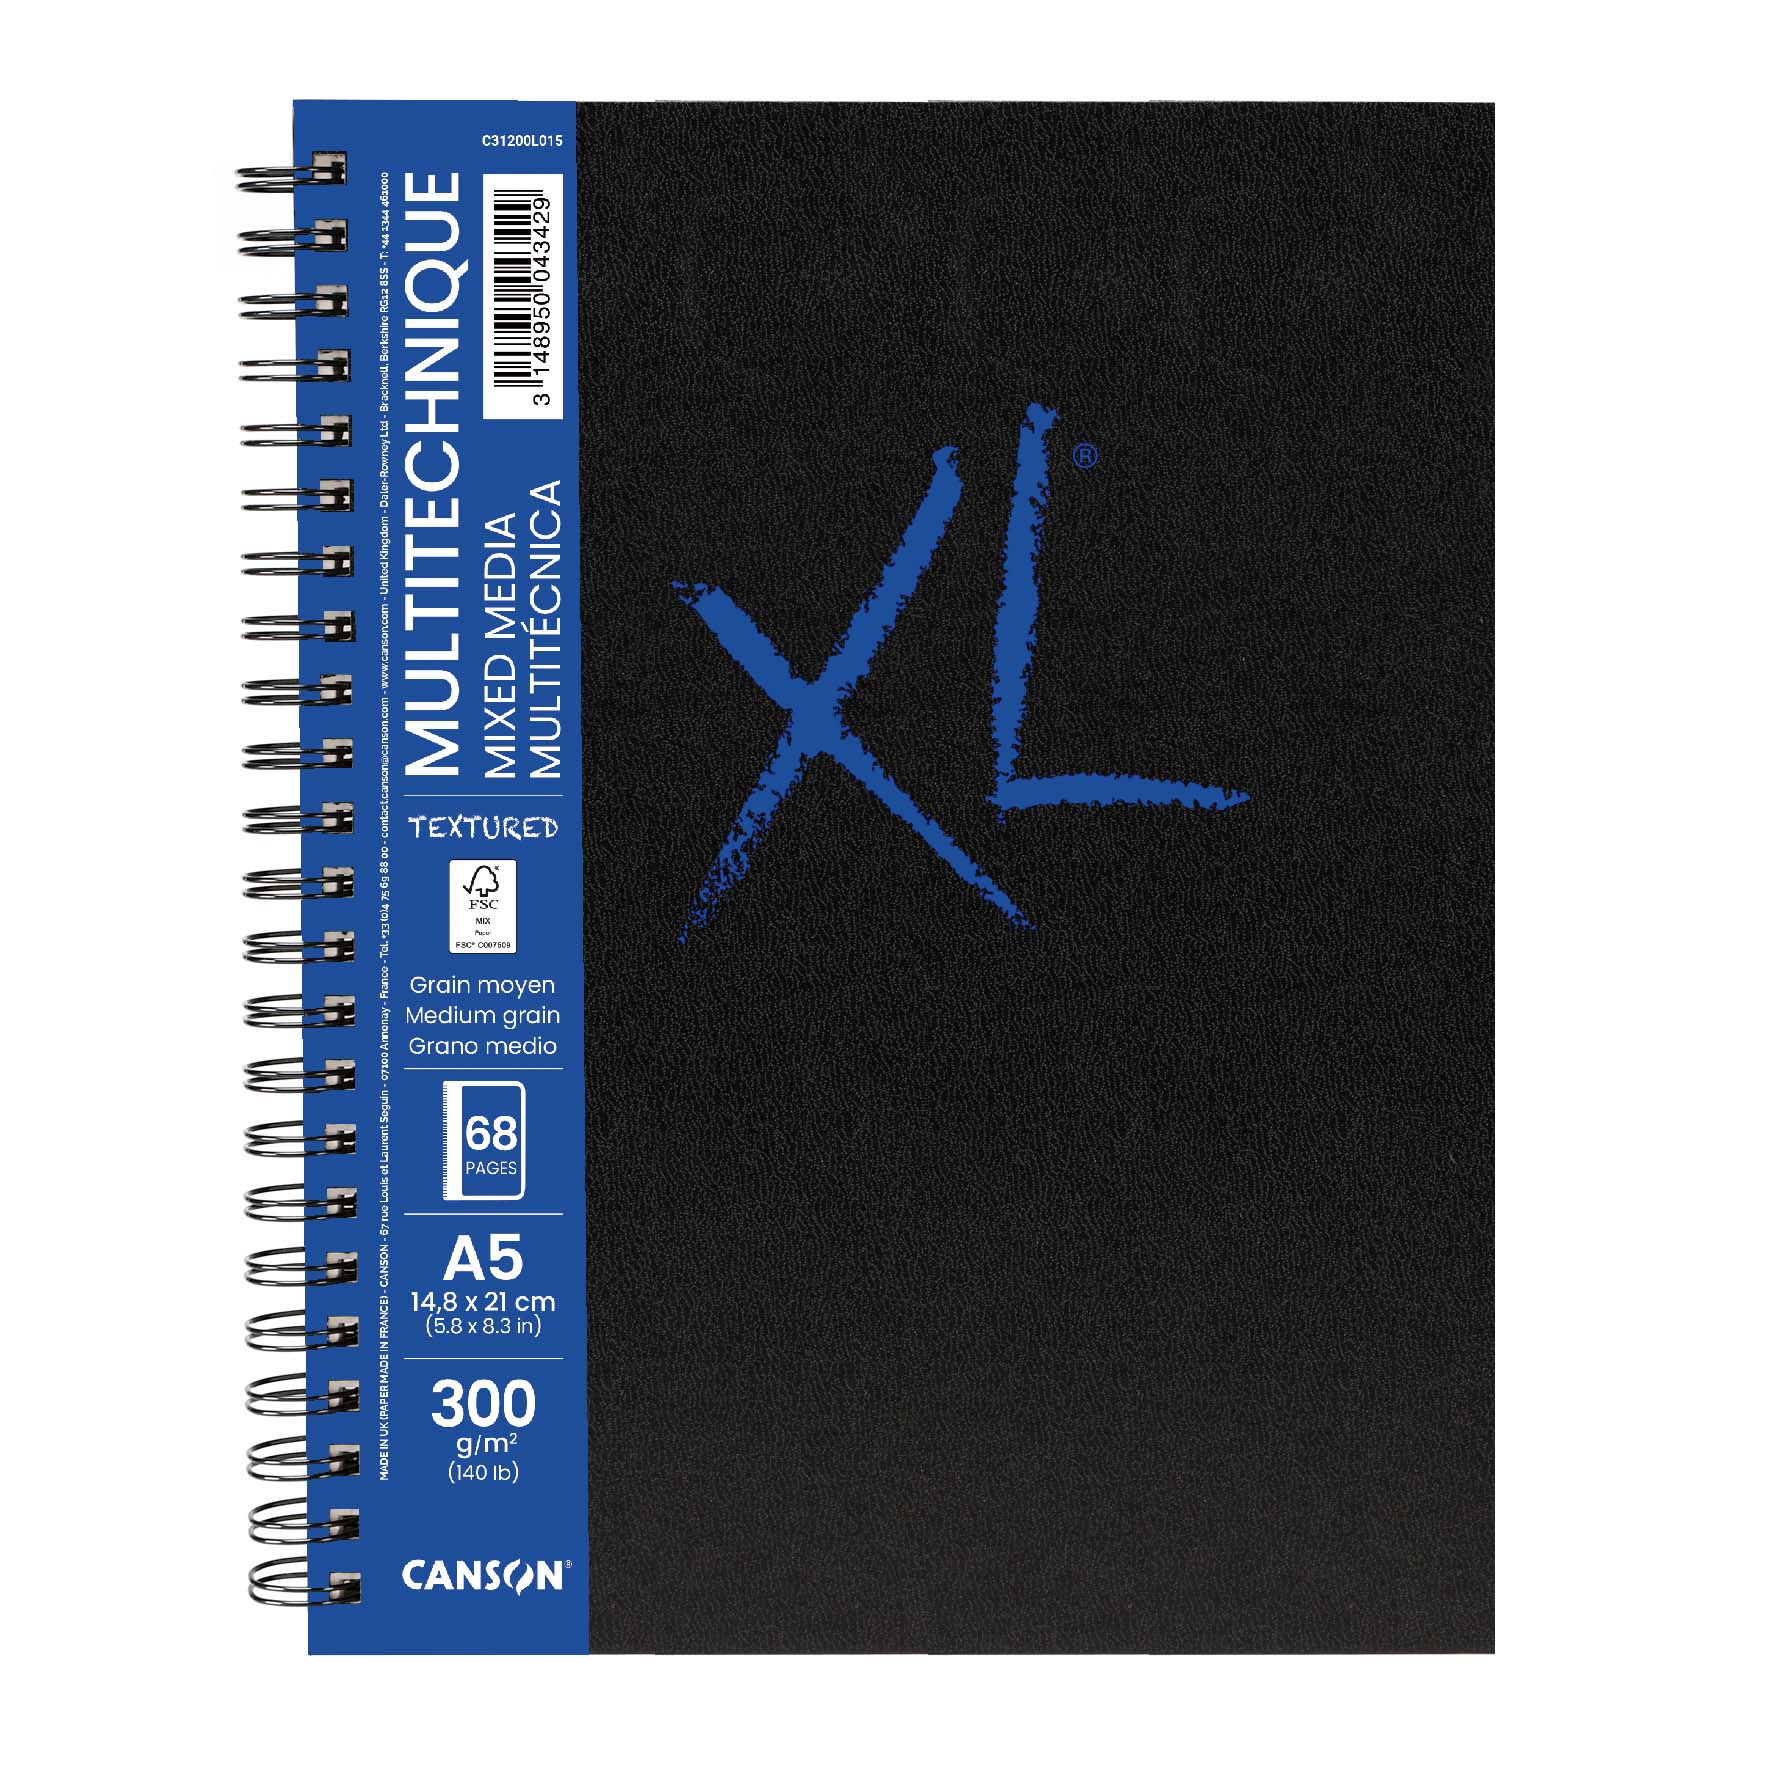 CANSON XL Mix Media (Mischtechniken) Buch, Hochformat, spiralgeb., DIN A5, 40 Blatt, 300 g/m², weiß